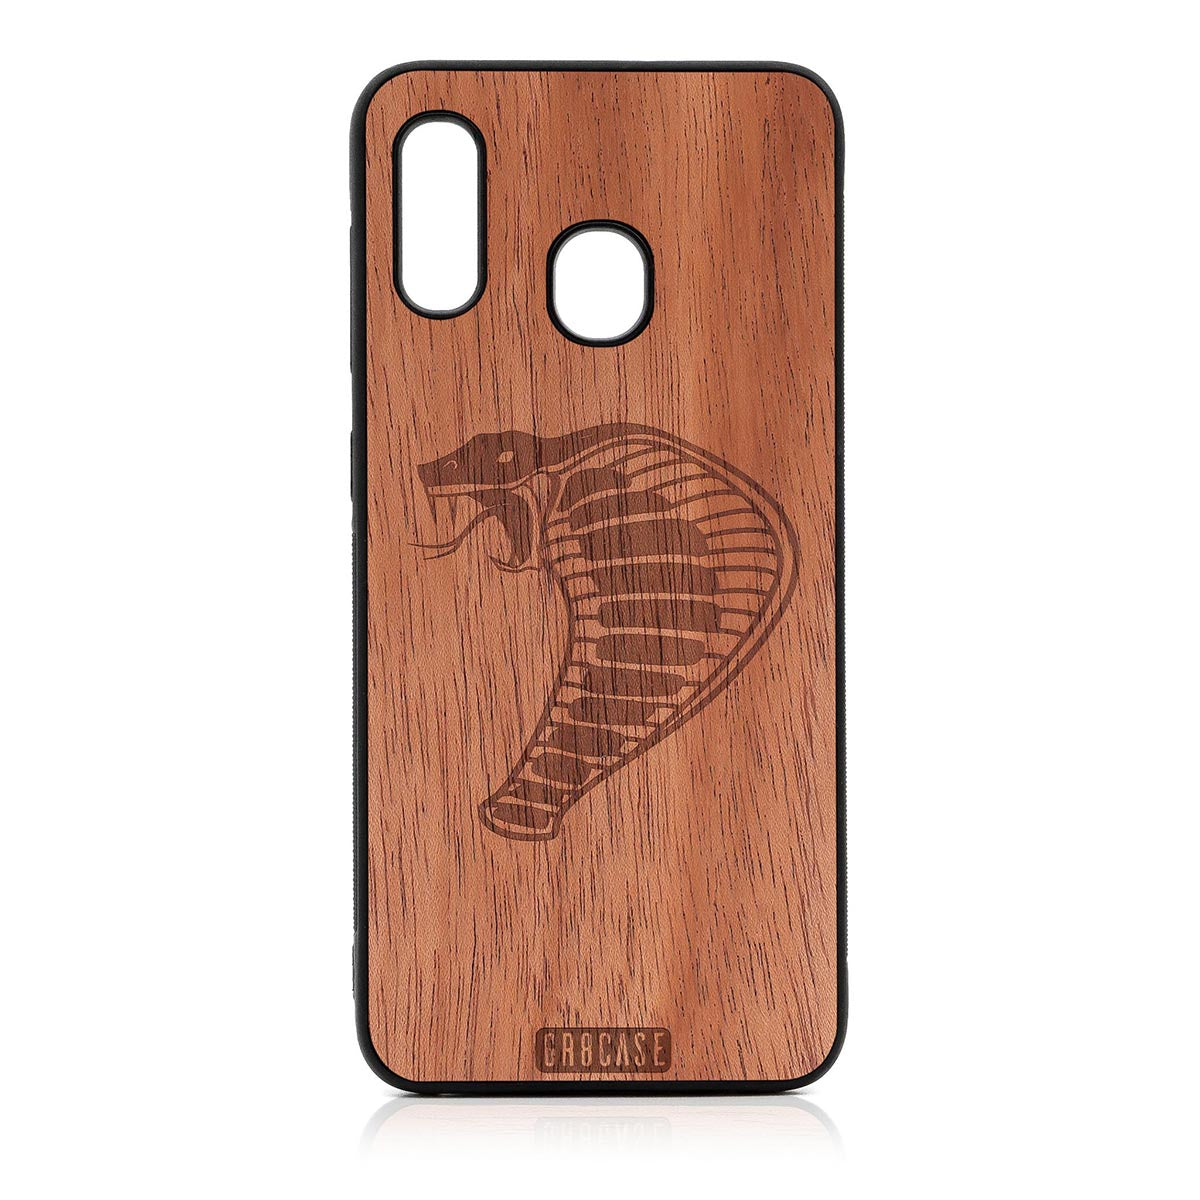 Cobra Design Wood Case For Samsung Galaxy A20 by GR8CASE